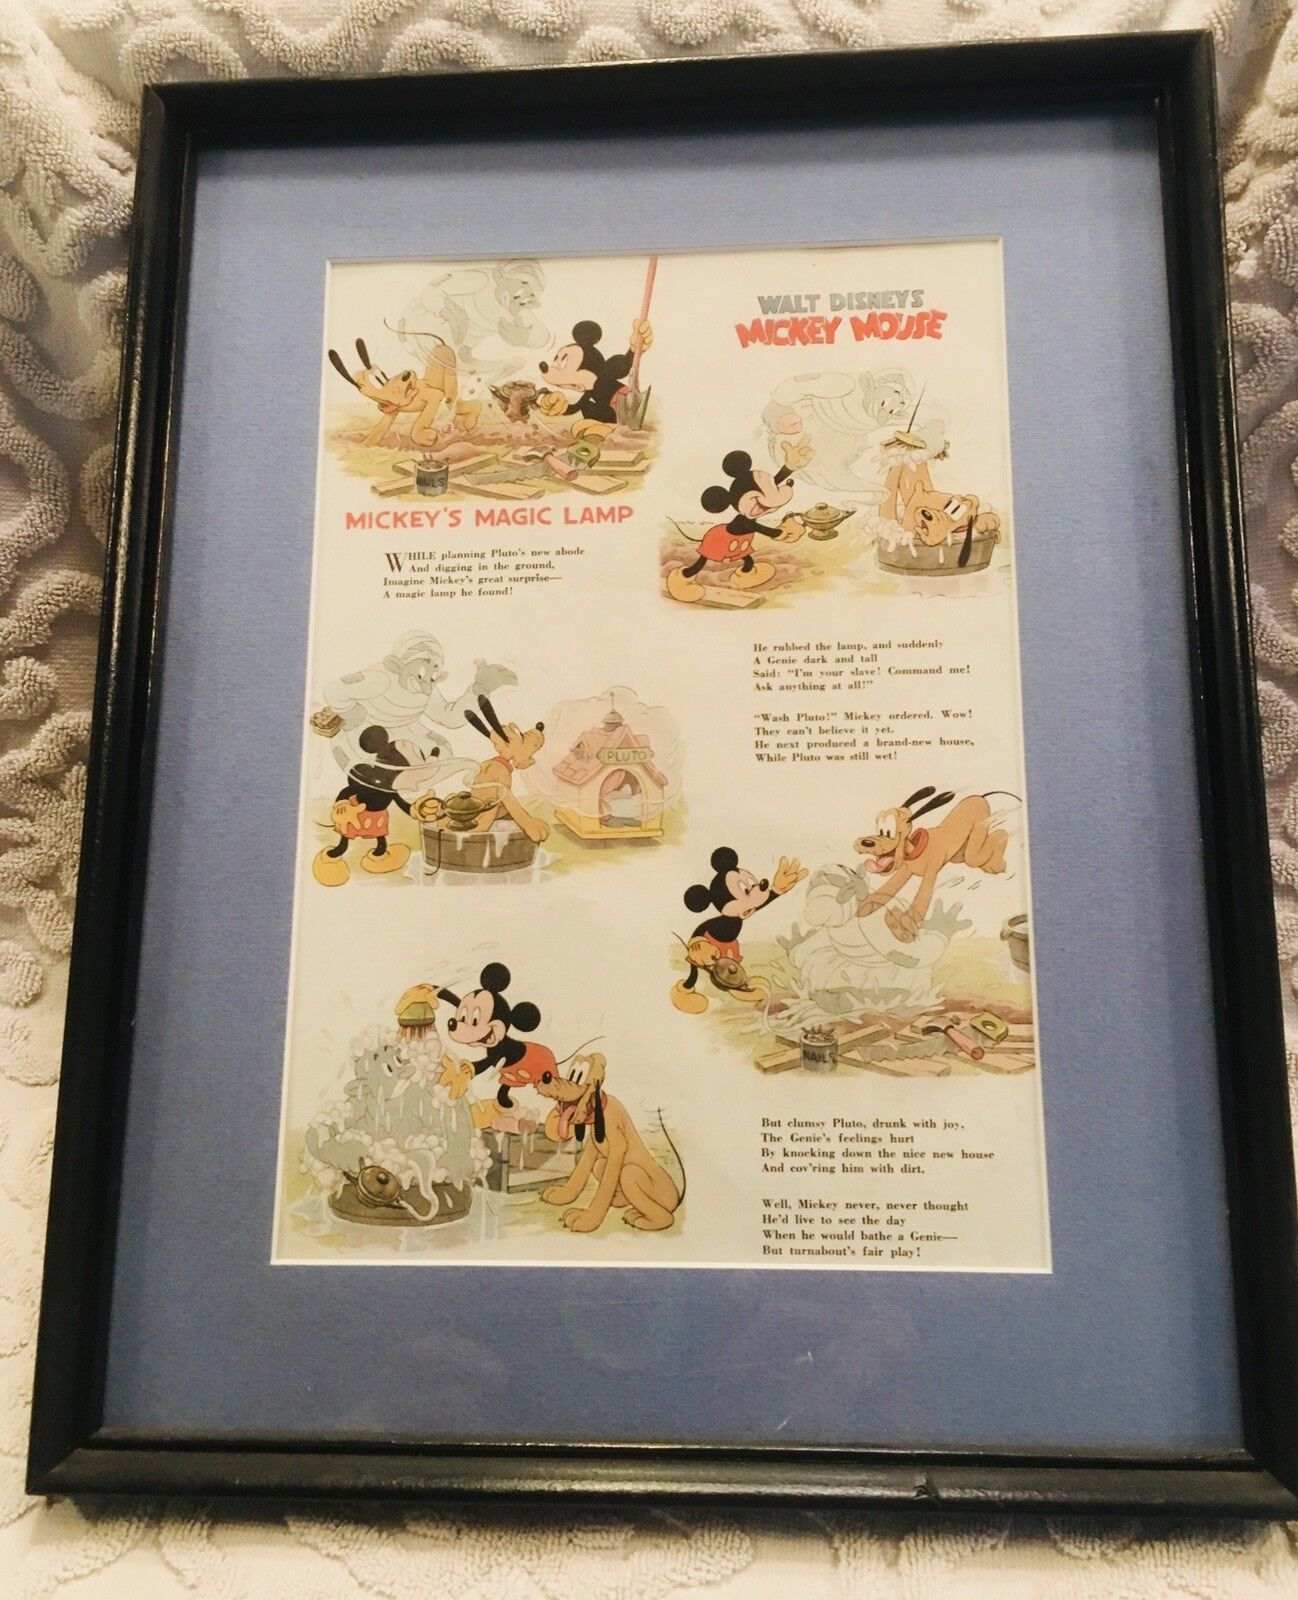 Vintage Disney Mickey Mouse Framed “mickey’s Magic Lamp” Framed Cartoon 1940